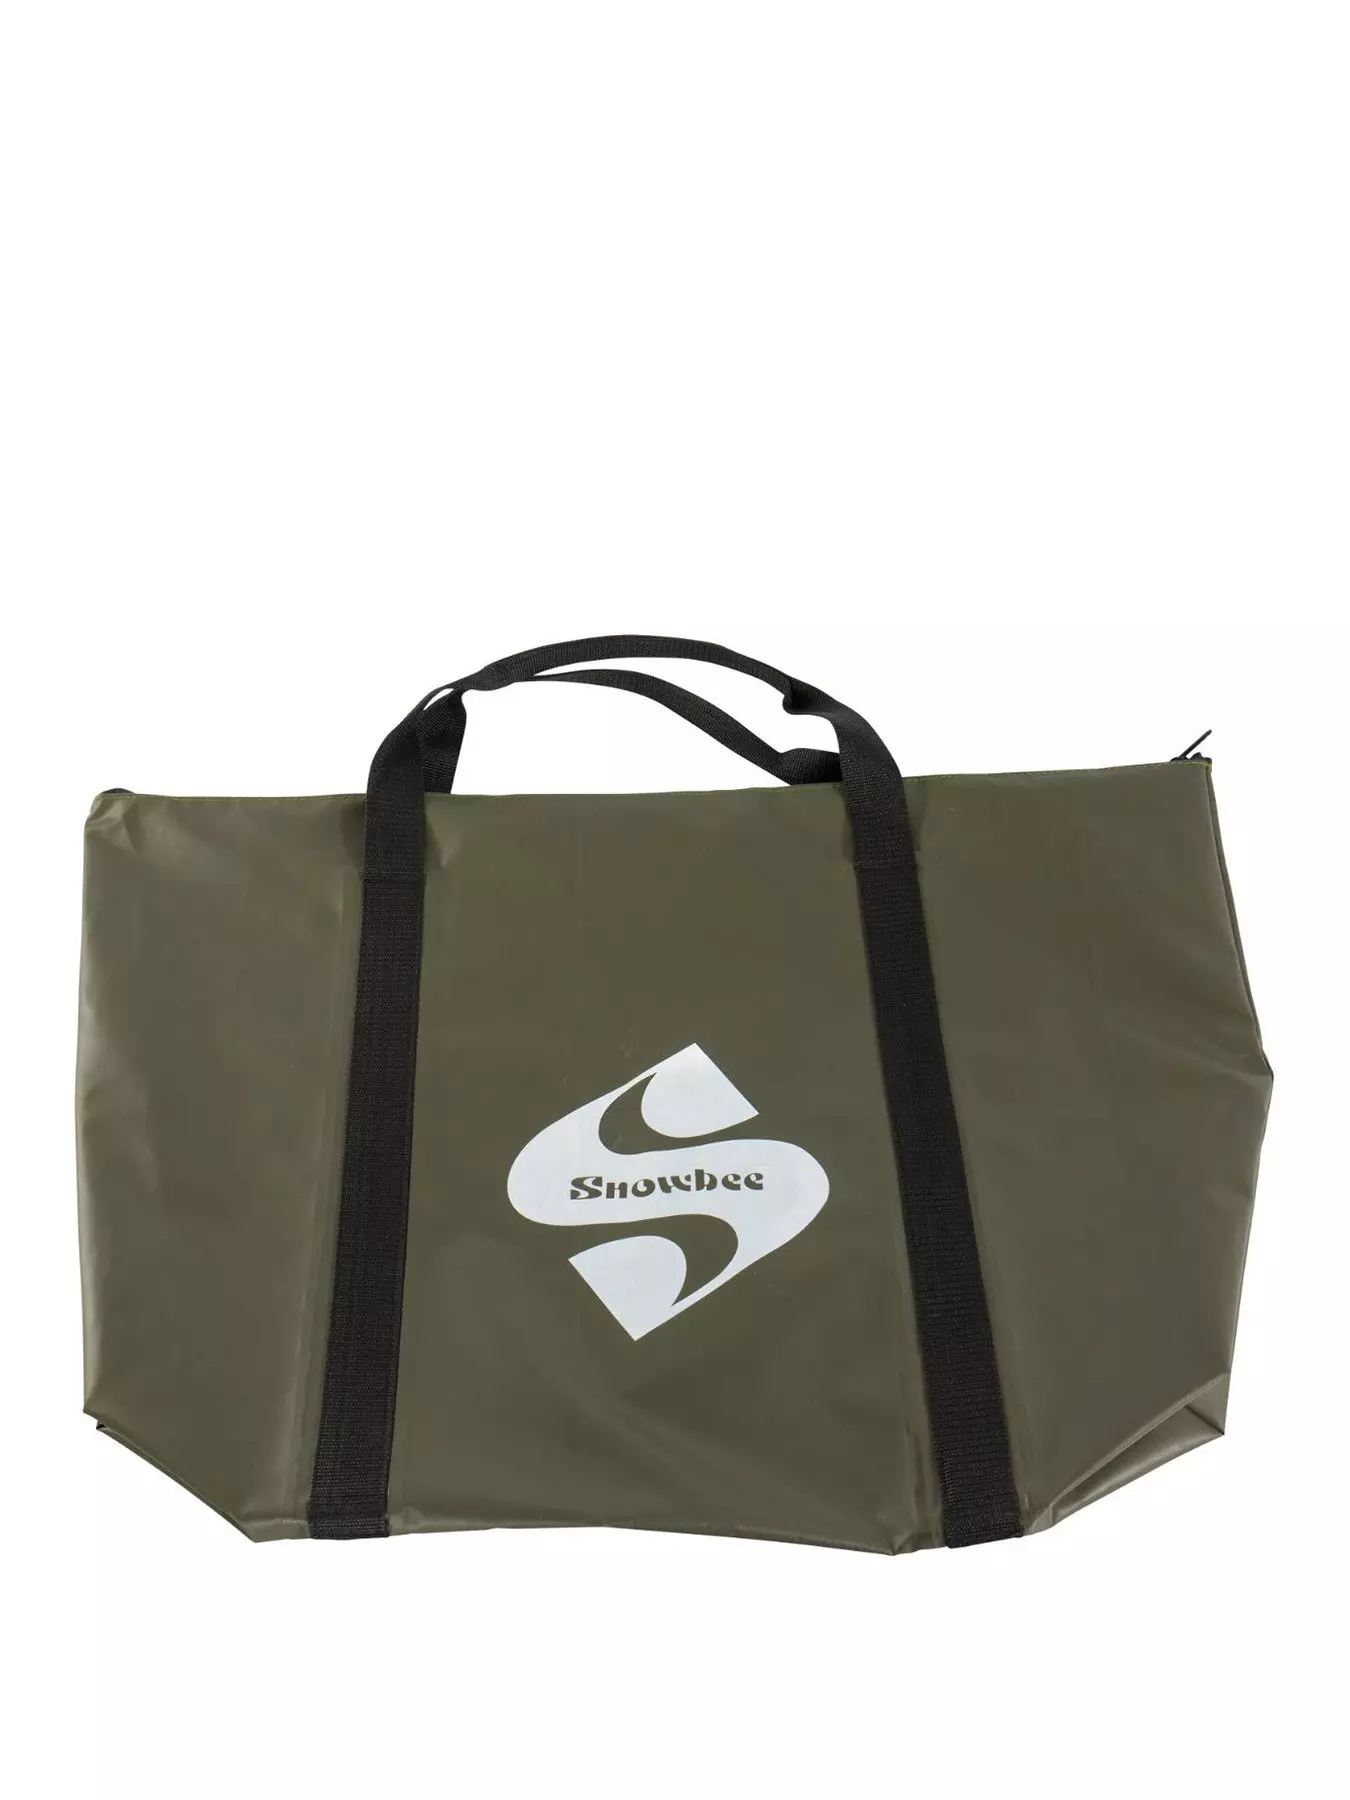 Sac SNOWBEE Travel rolling bag